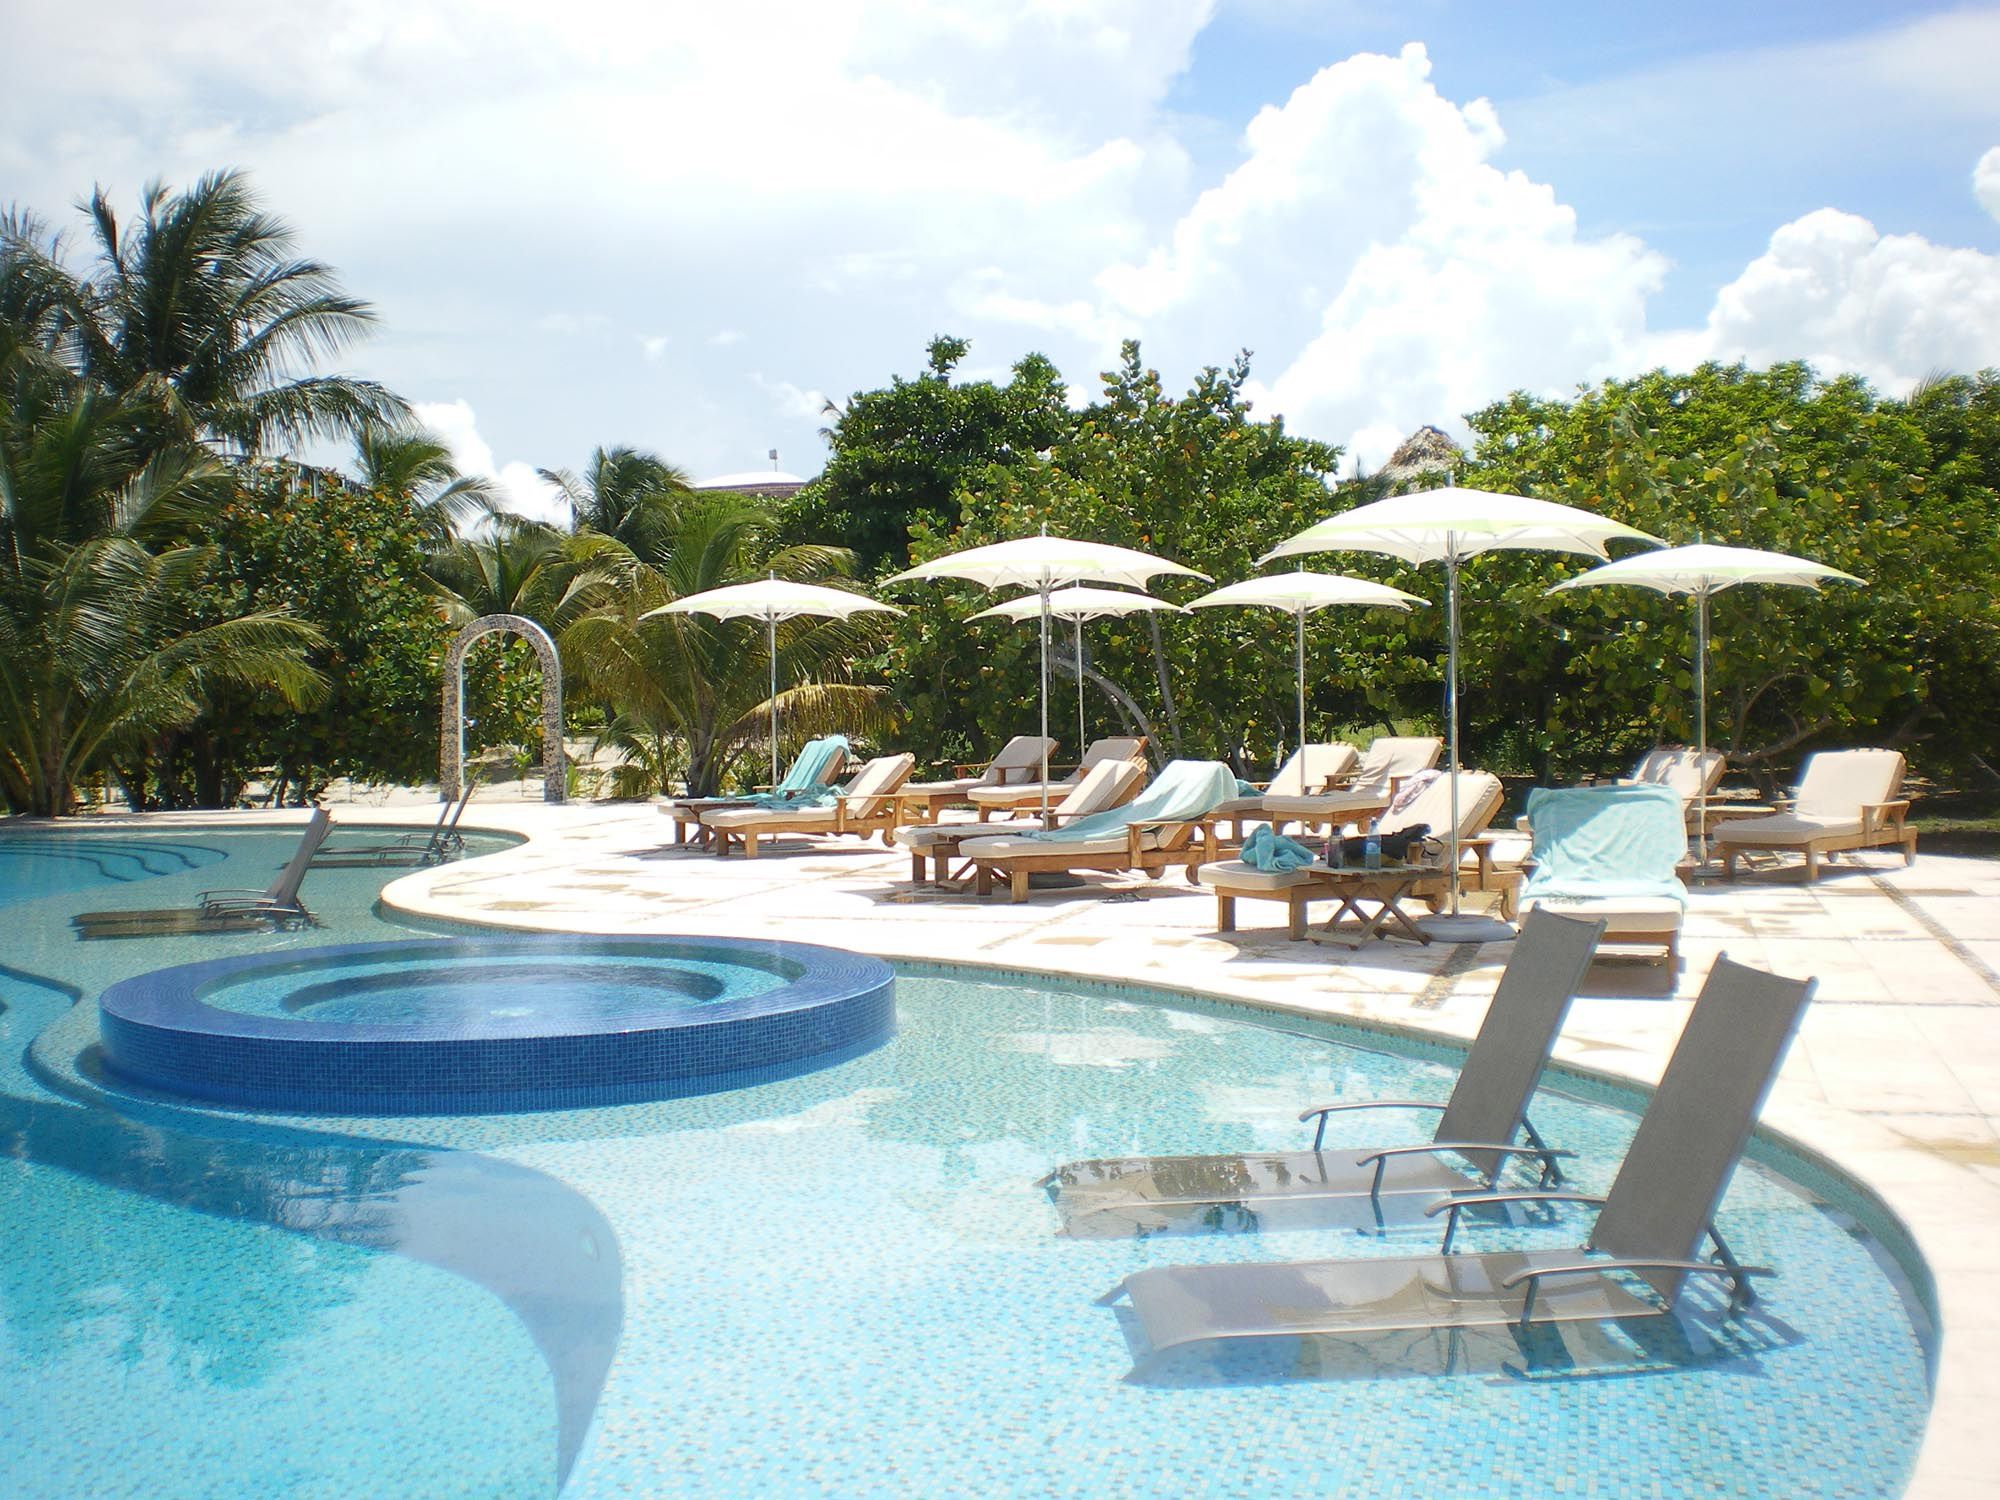 Hoteles con Piscina: 10 Mejores del Caribe 2